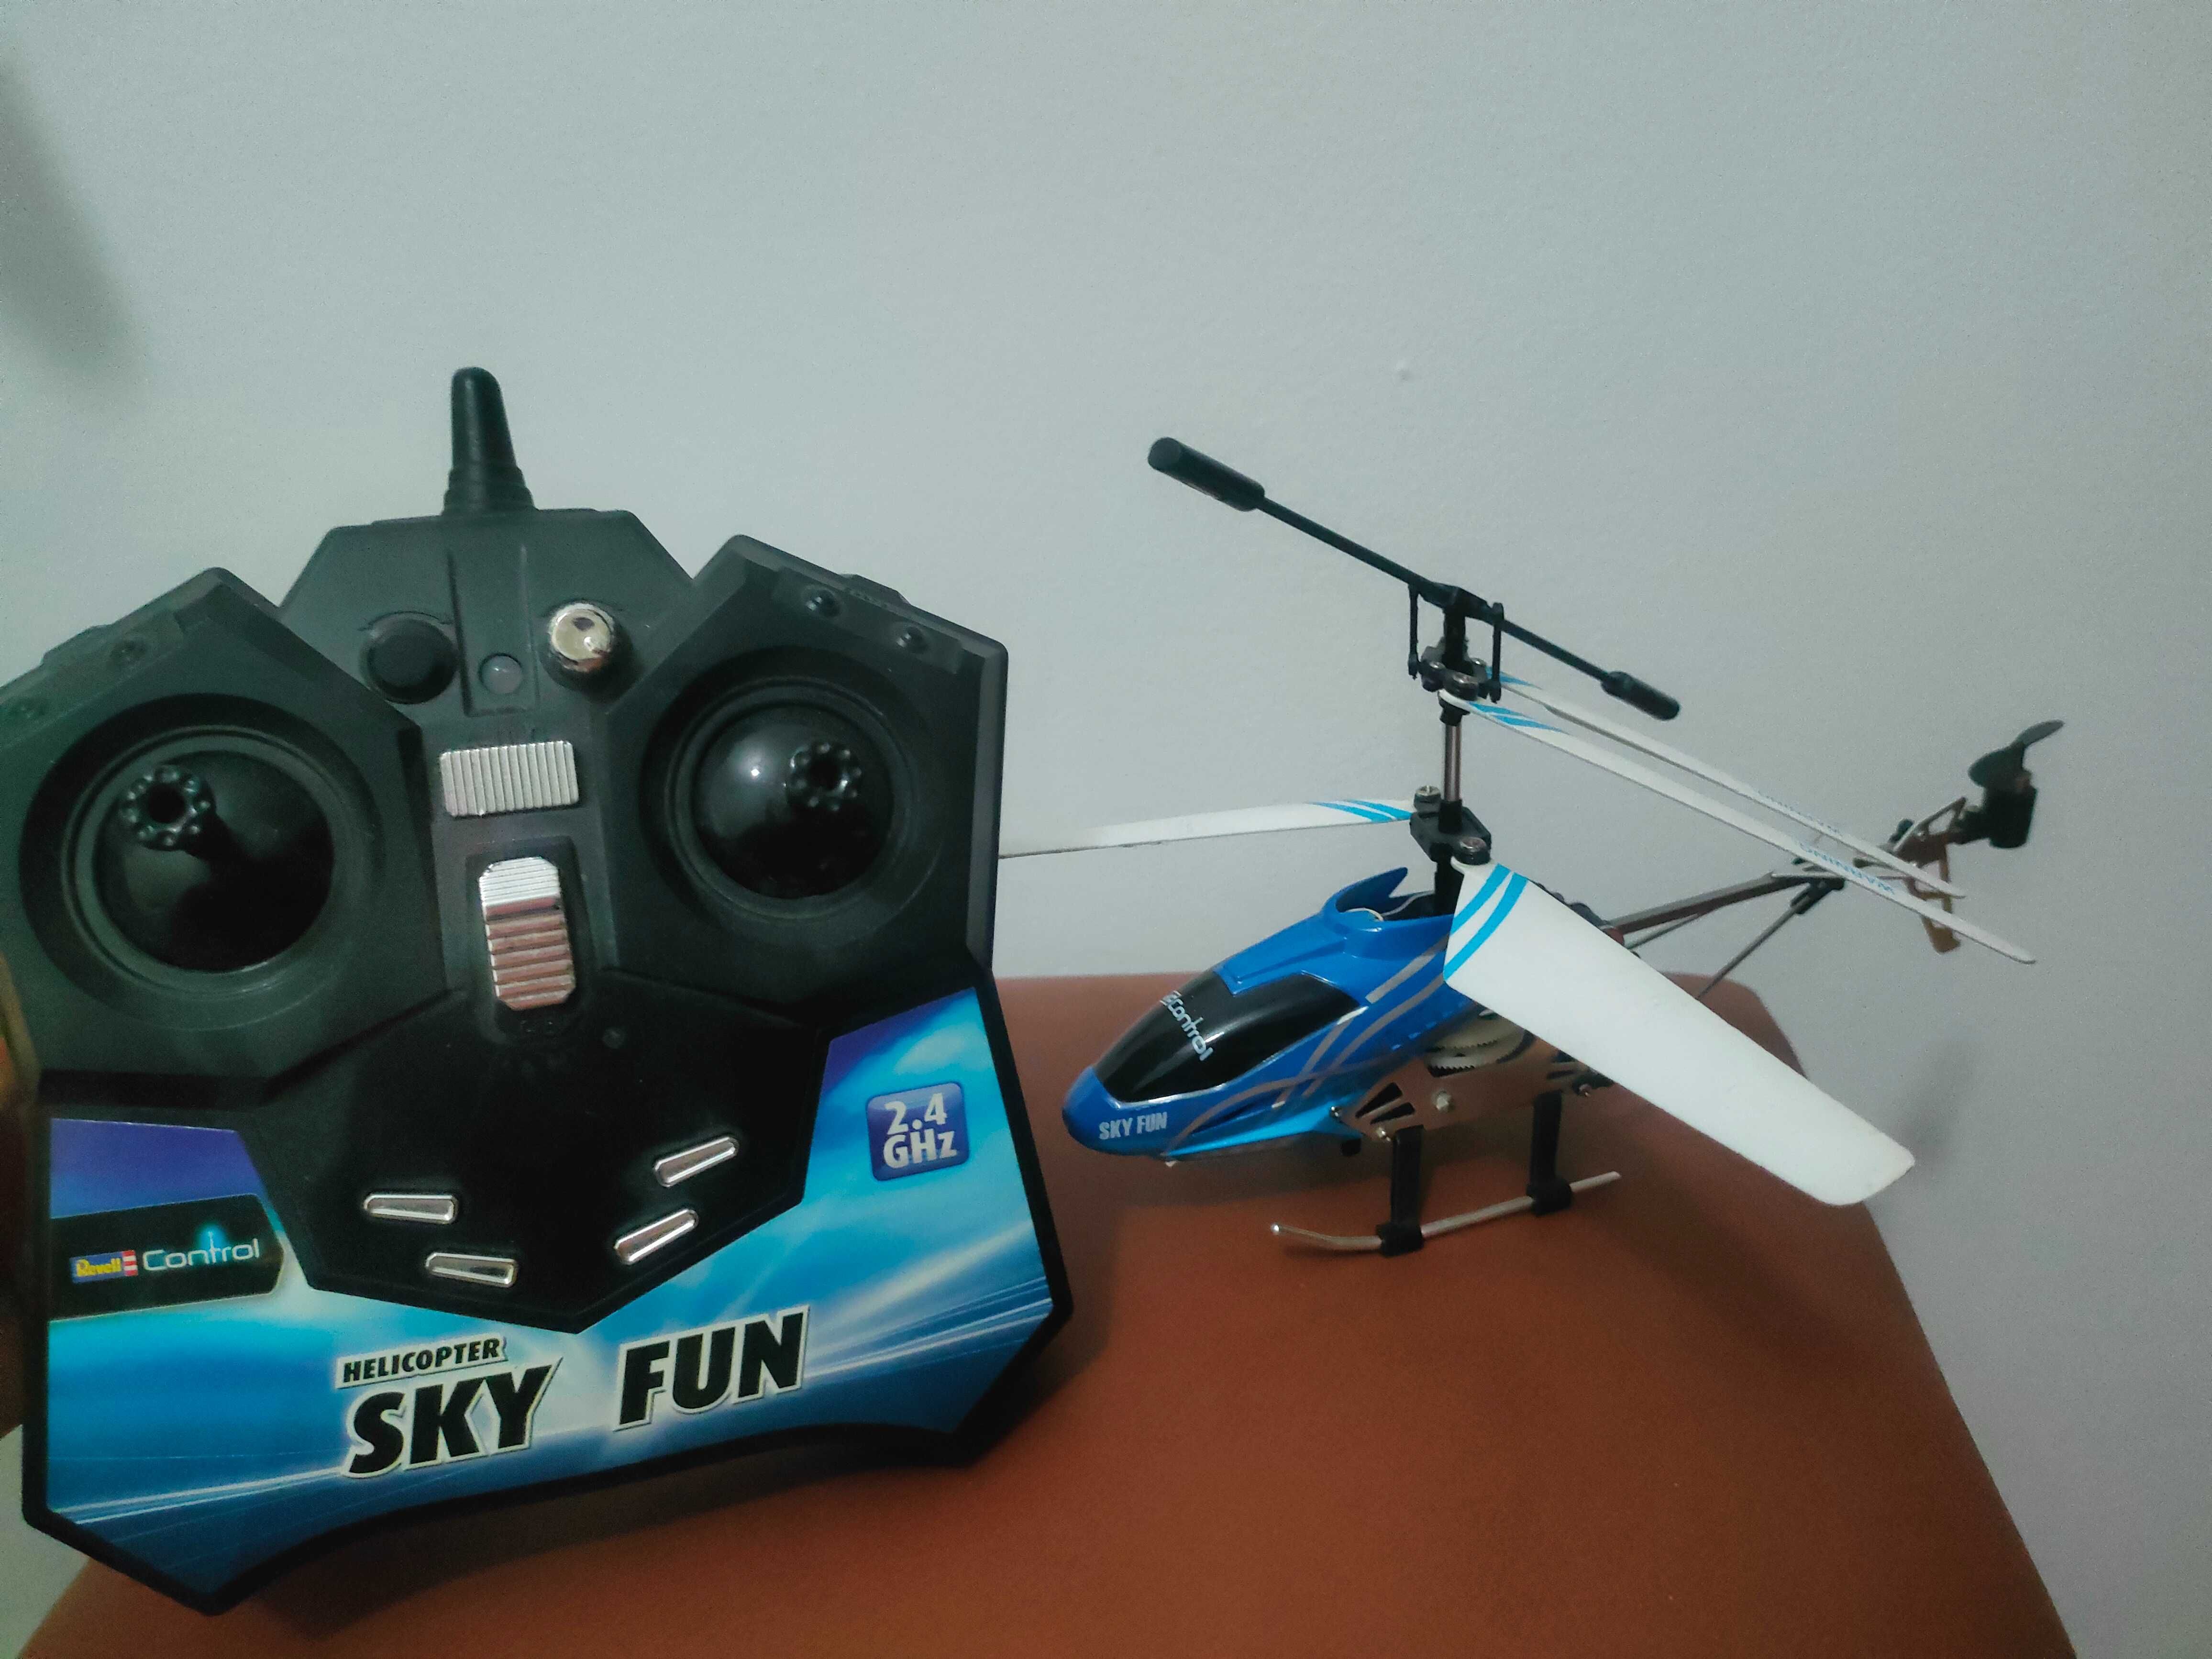 Helikopter SKY FUN 2.4 GHz